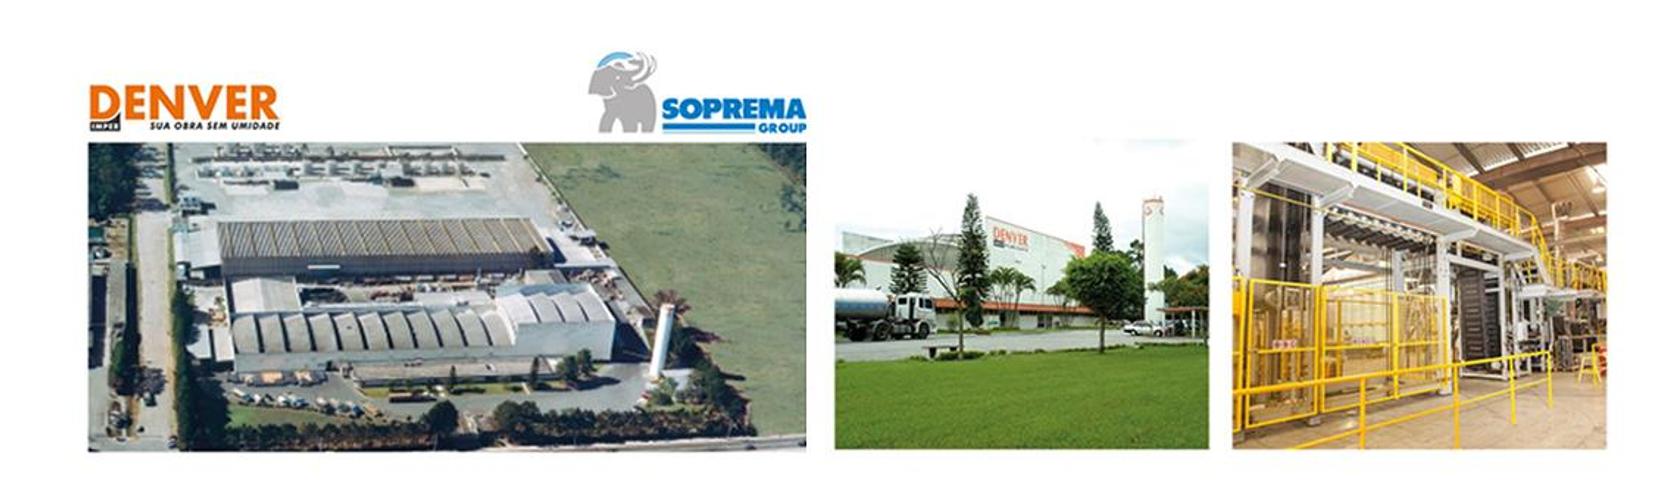 Soprema acquisisce la società Denver Impermeabilizantes in Brasile